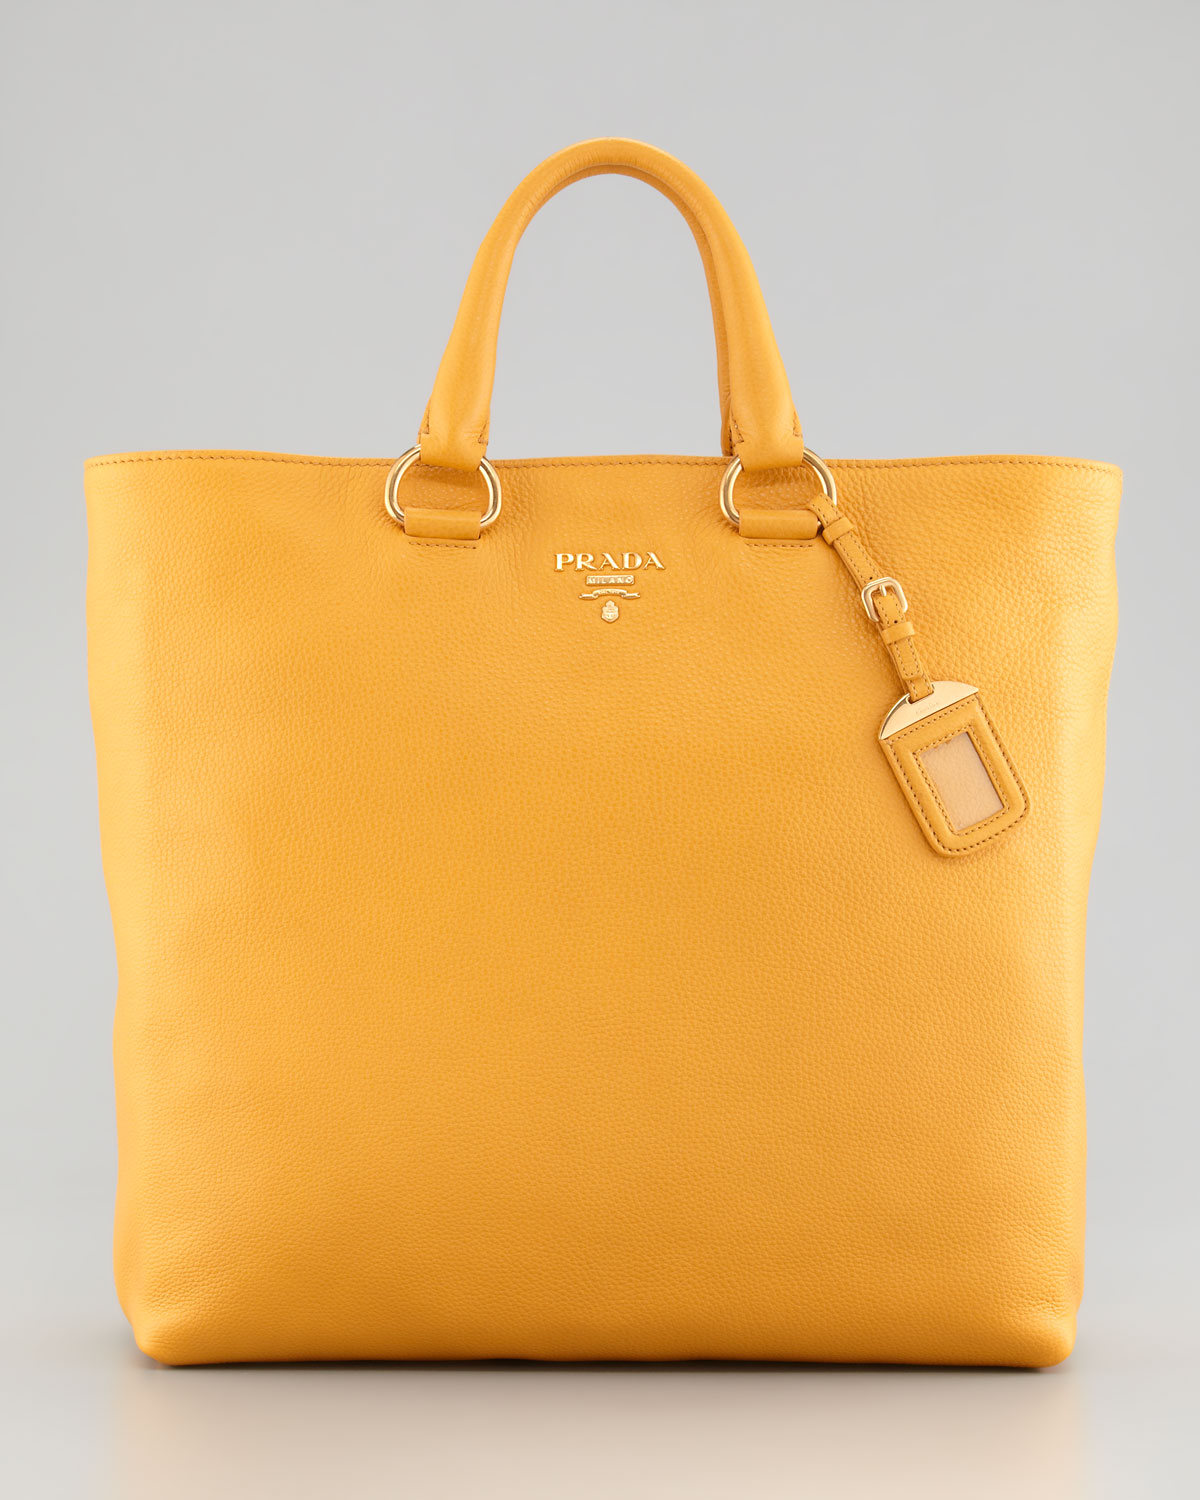 Prada Daino Pebbled Leather Tote Bag in Orange (mimosa yellow)) | Lyst  